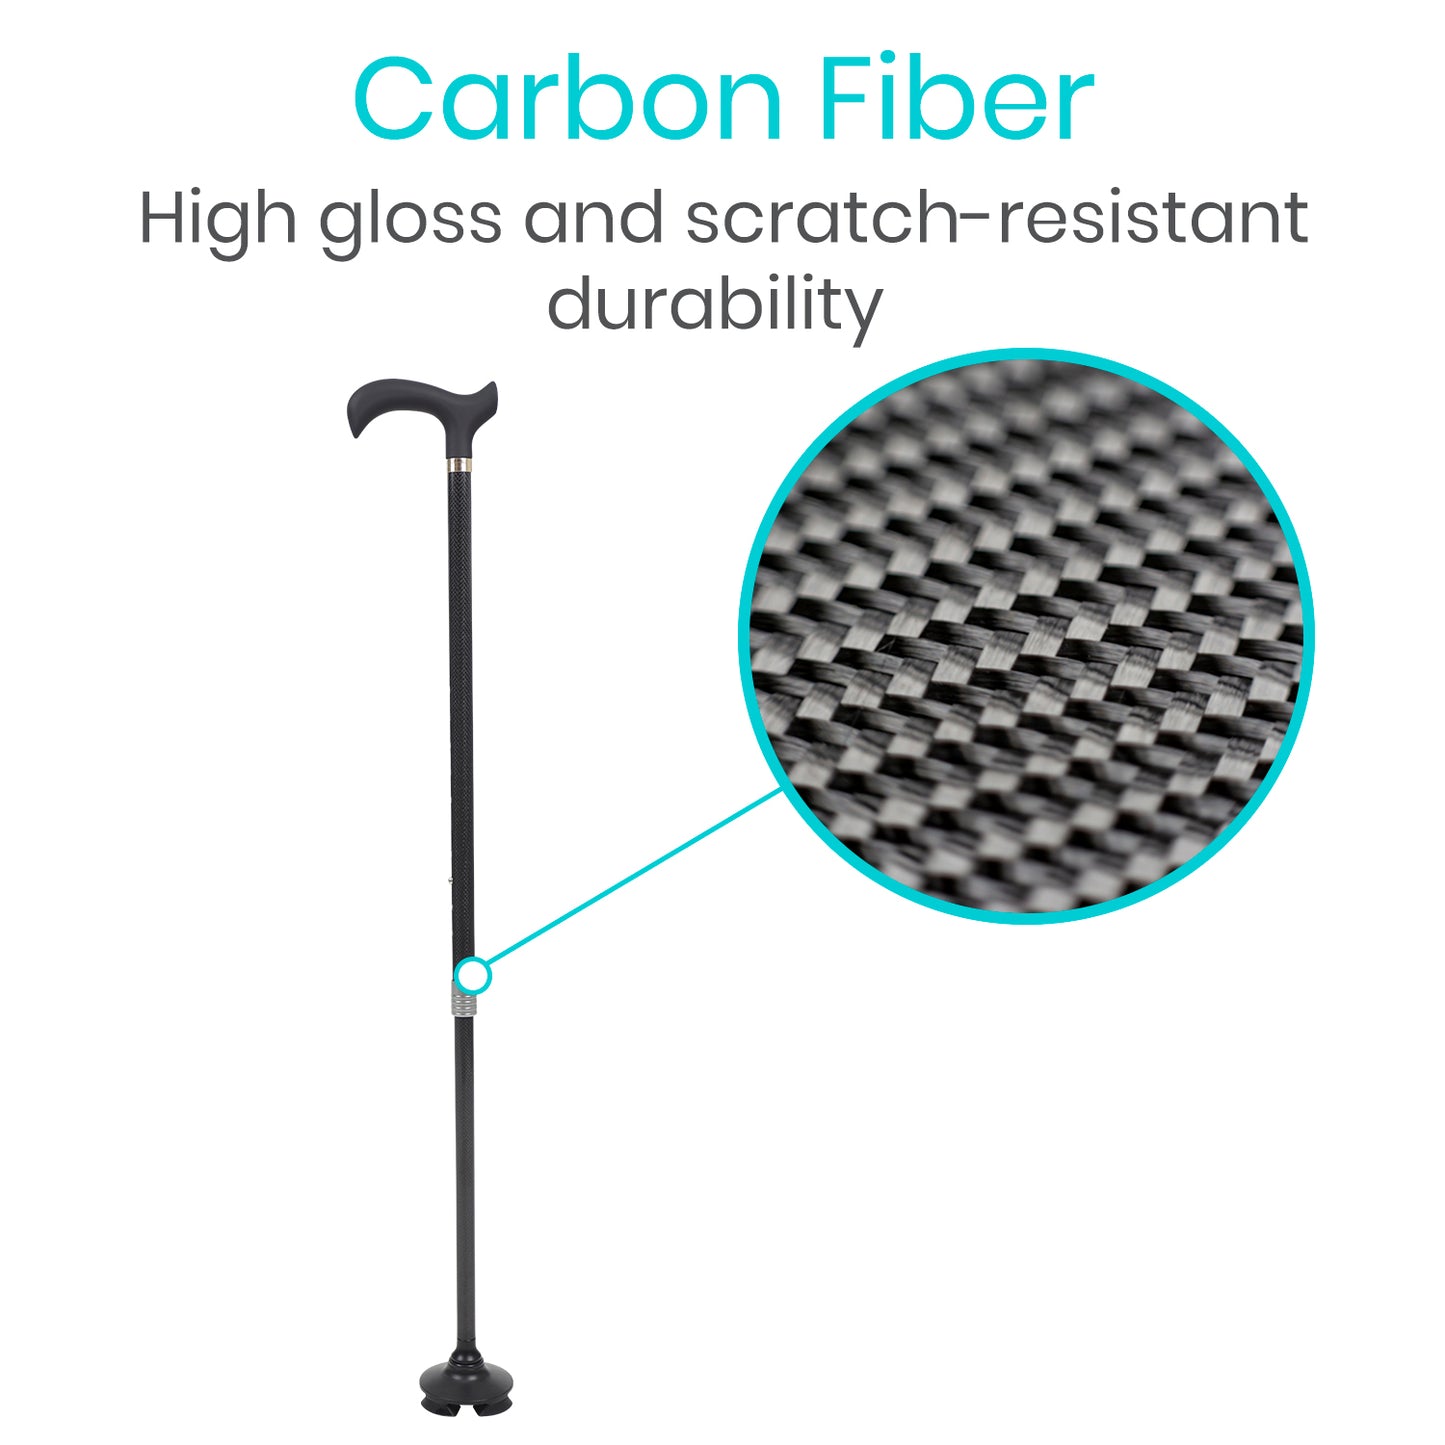 Carbon Fiber Standing Cane